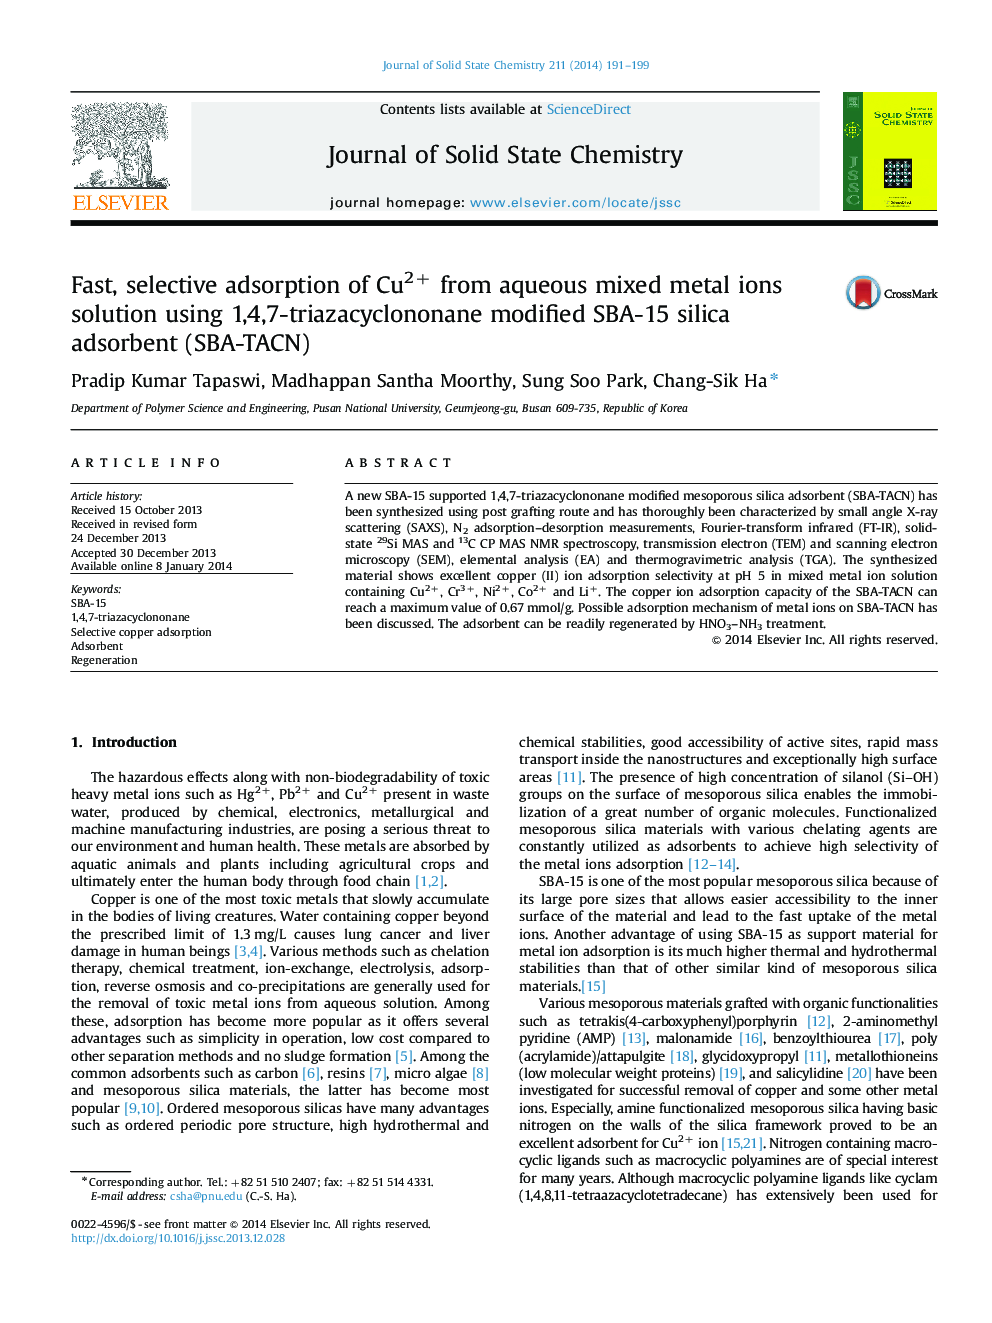 Fast, selective adsorption of Cu2+ from aqueous mixed metal ions solution using 1,4,7-triazacyclononane modified SBA-15 silica adsorbent (SBA-TACN)